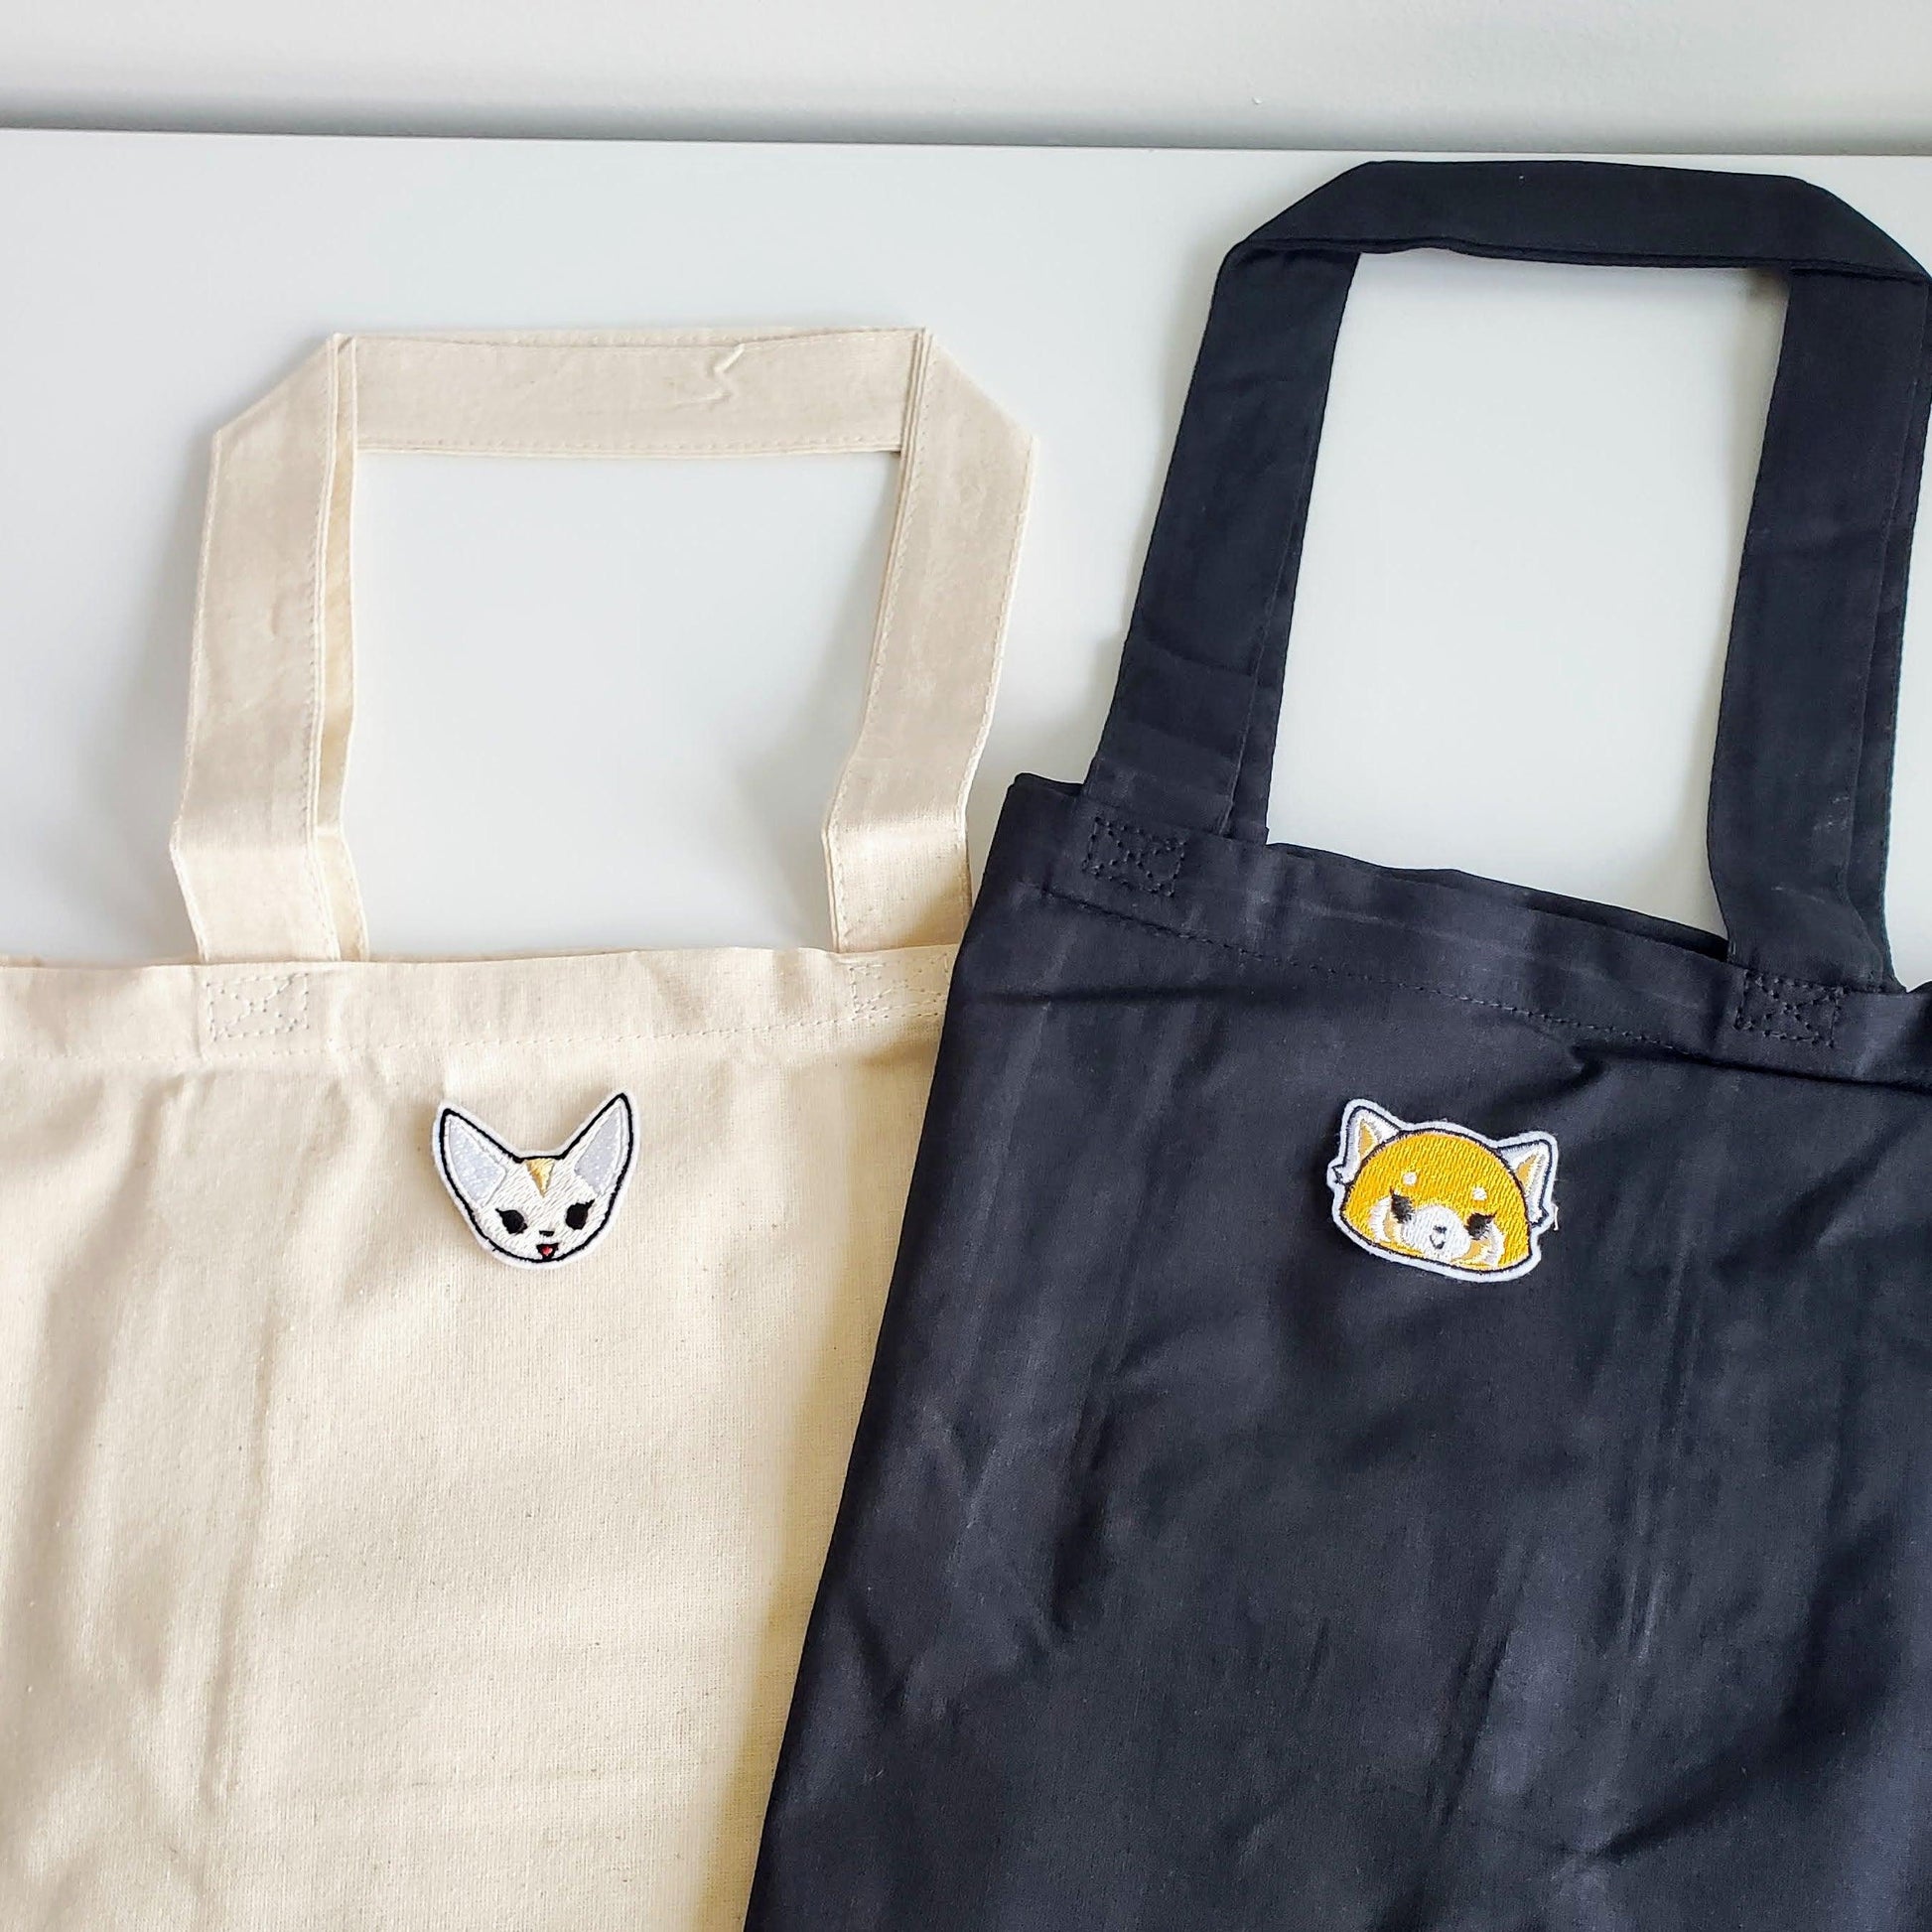 Aggretsuko Fenneko Embroidery Anime Tote Bags + Patches - Moko's Boutique